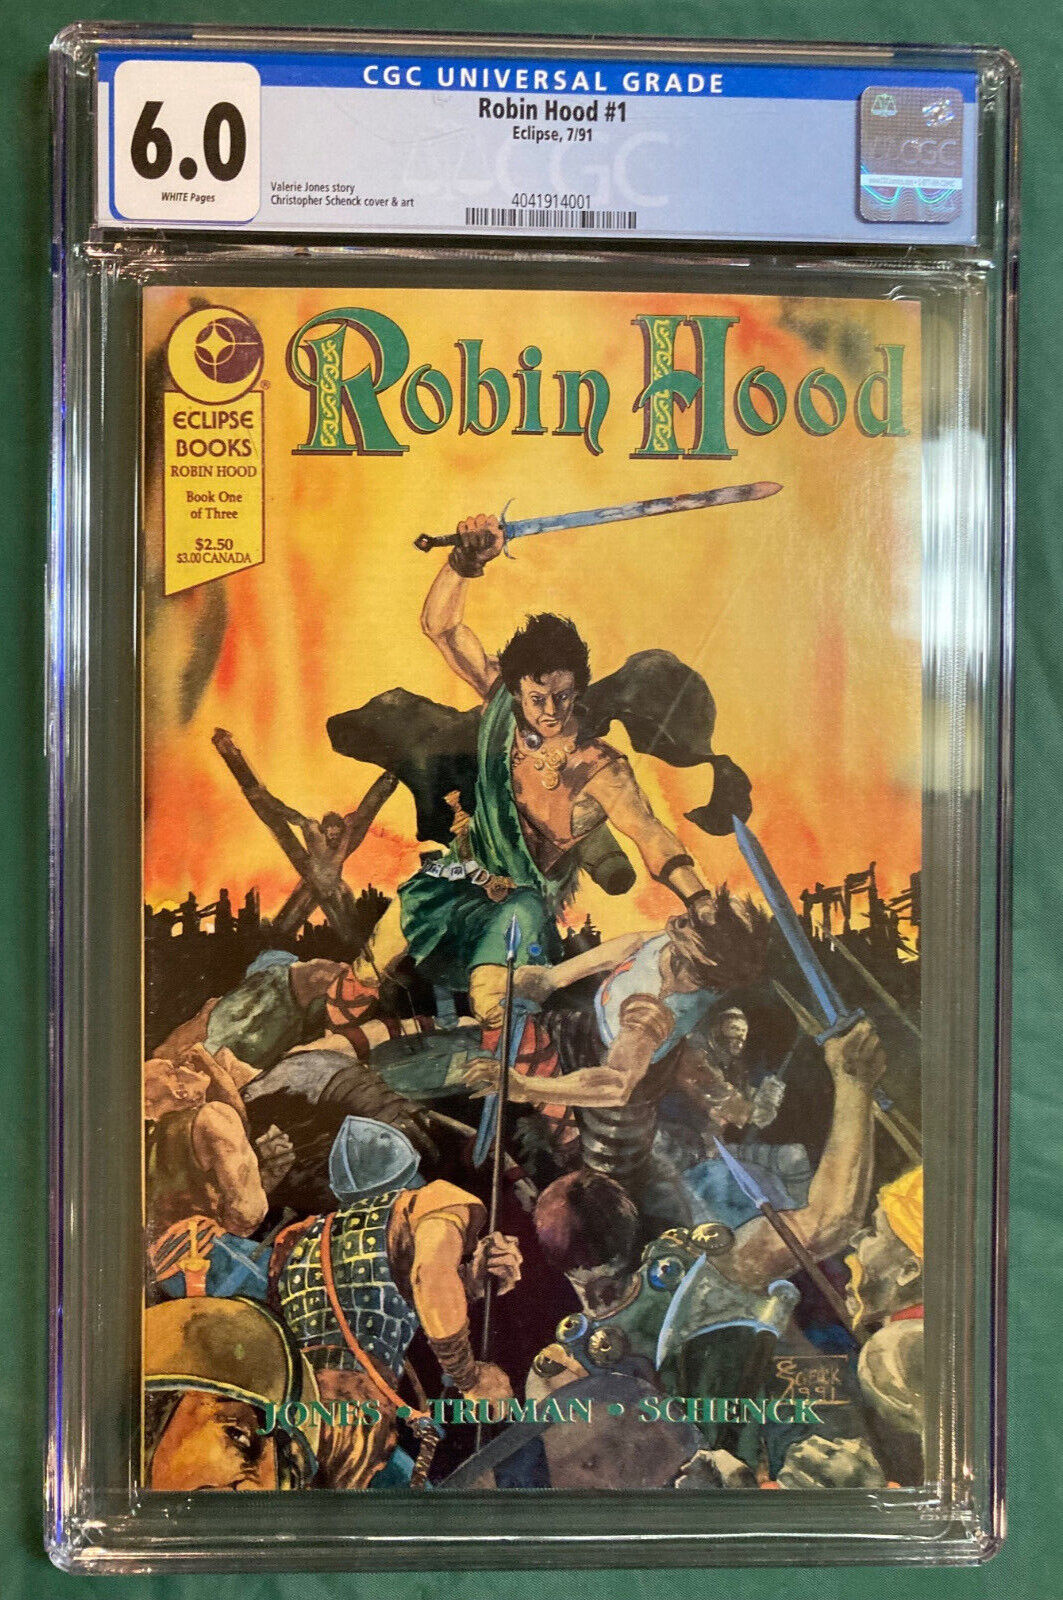 Robin Hood #1 Eclipse Comics 1991 CGC 6.0 Tim Truman 1 of 3 mini series.